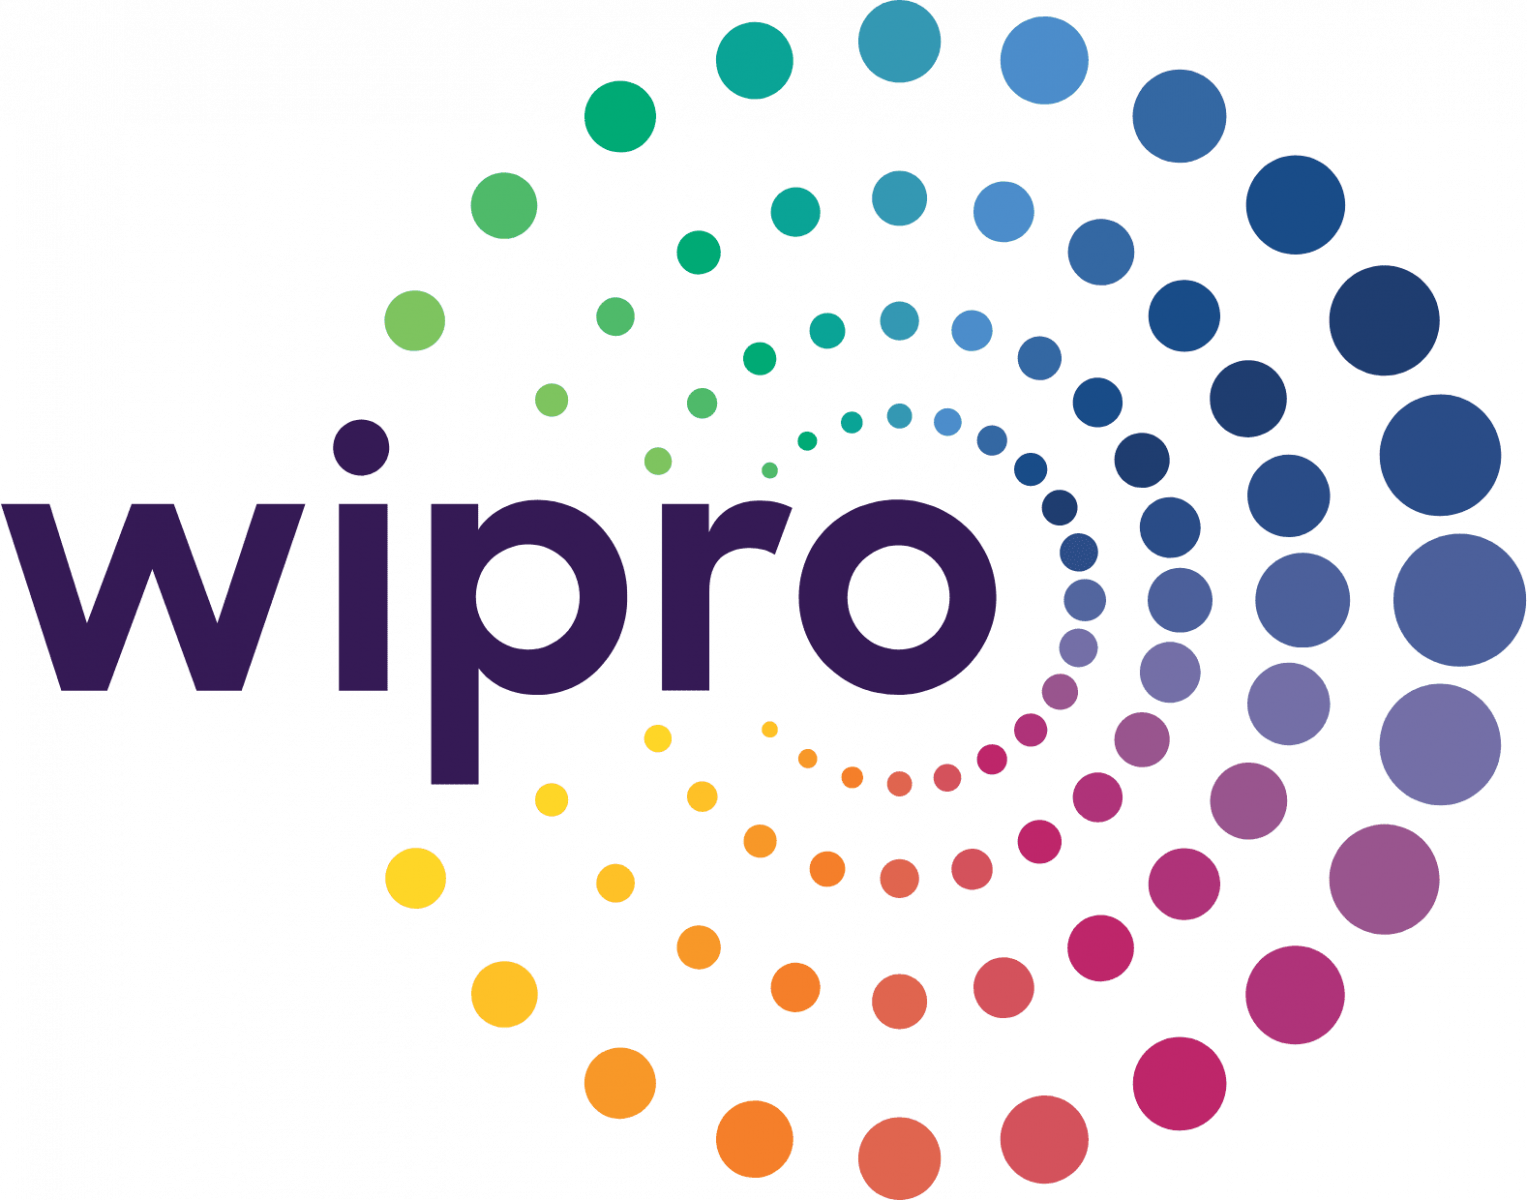 Wipro it companies in Kolkata